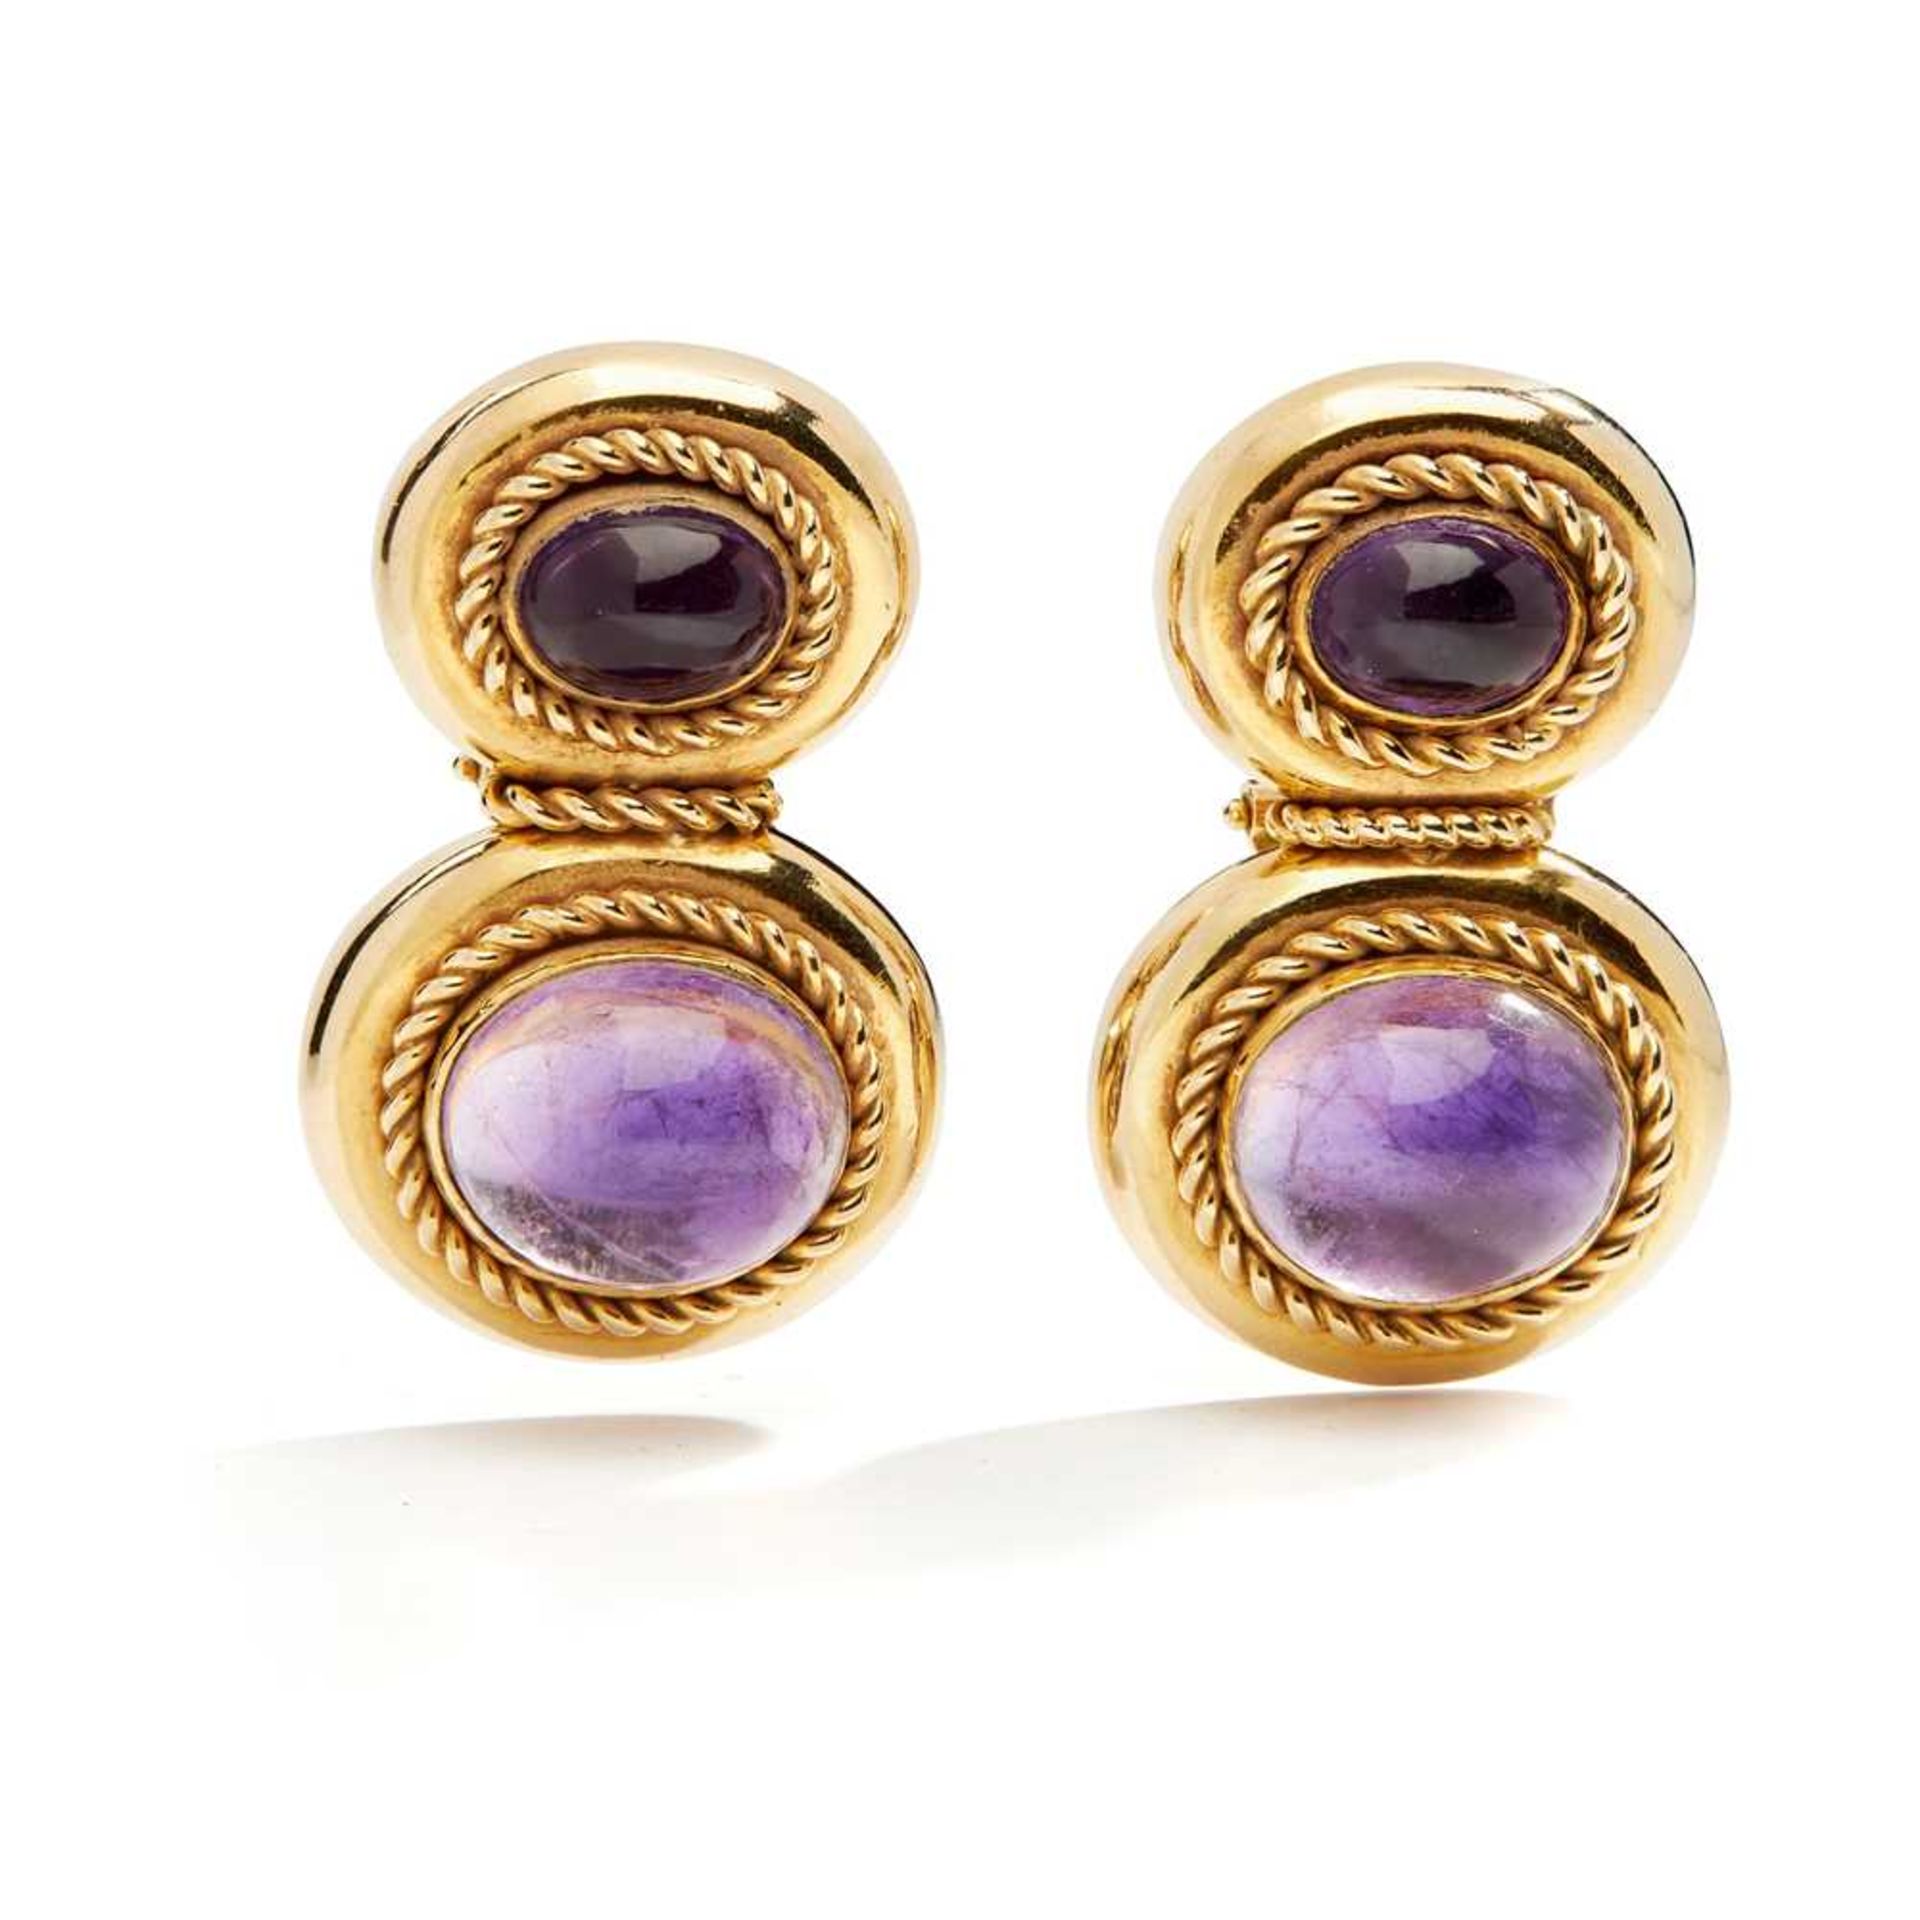 A pair of amethyst earrings, by Kiki McDonough